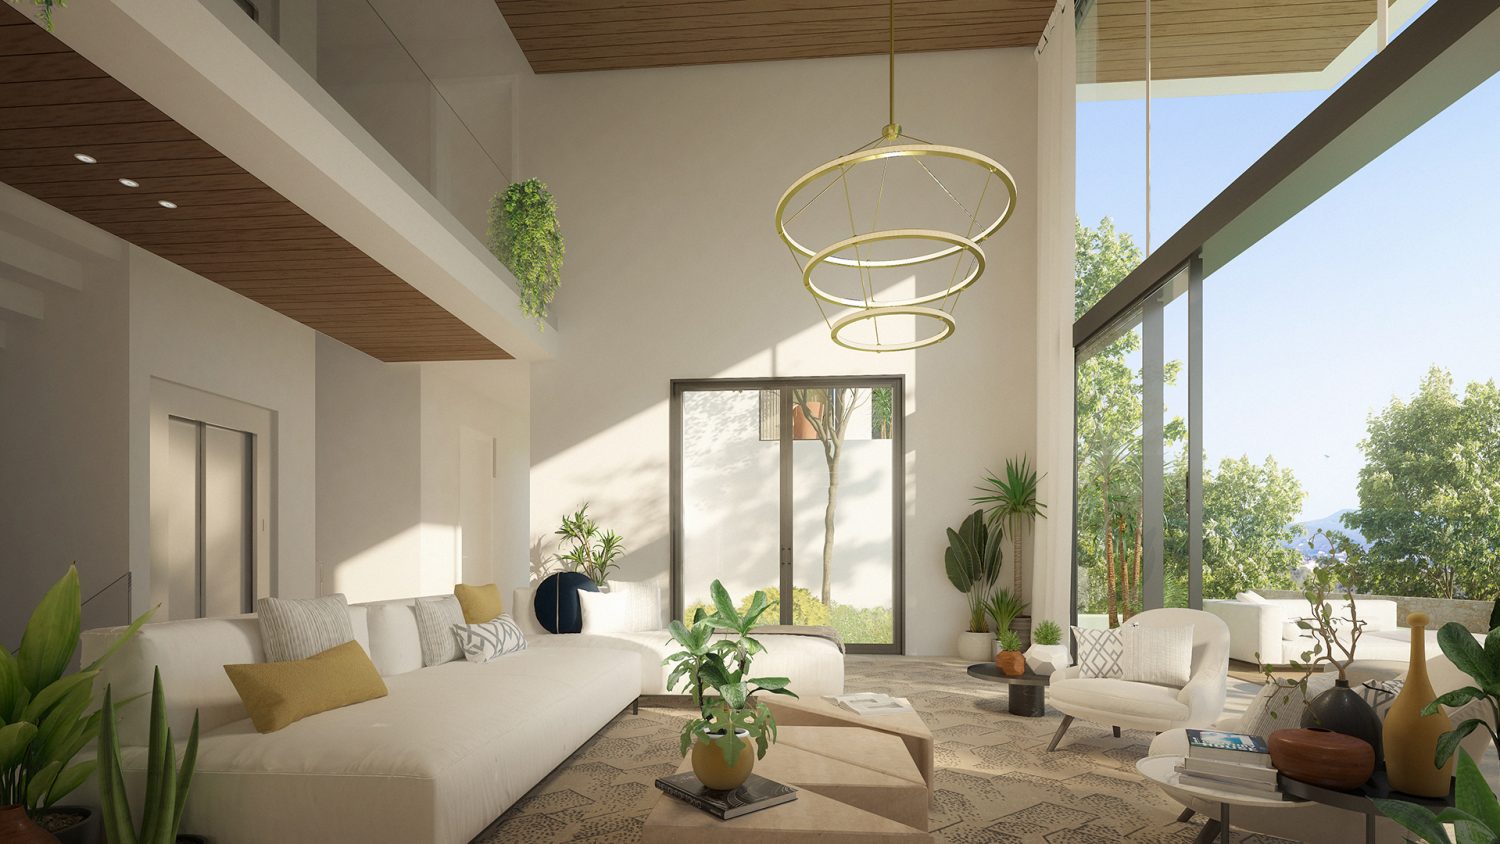 Project of 20 luxury villas in Roca Llisa near the golf of Ibiza